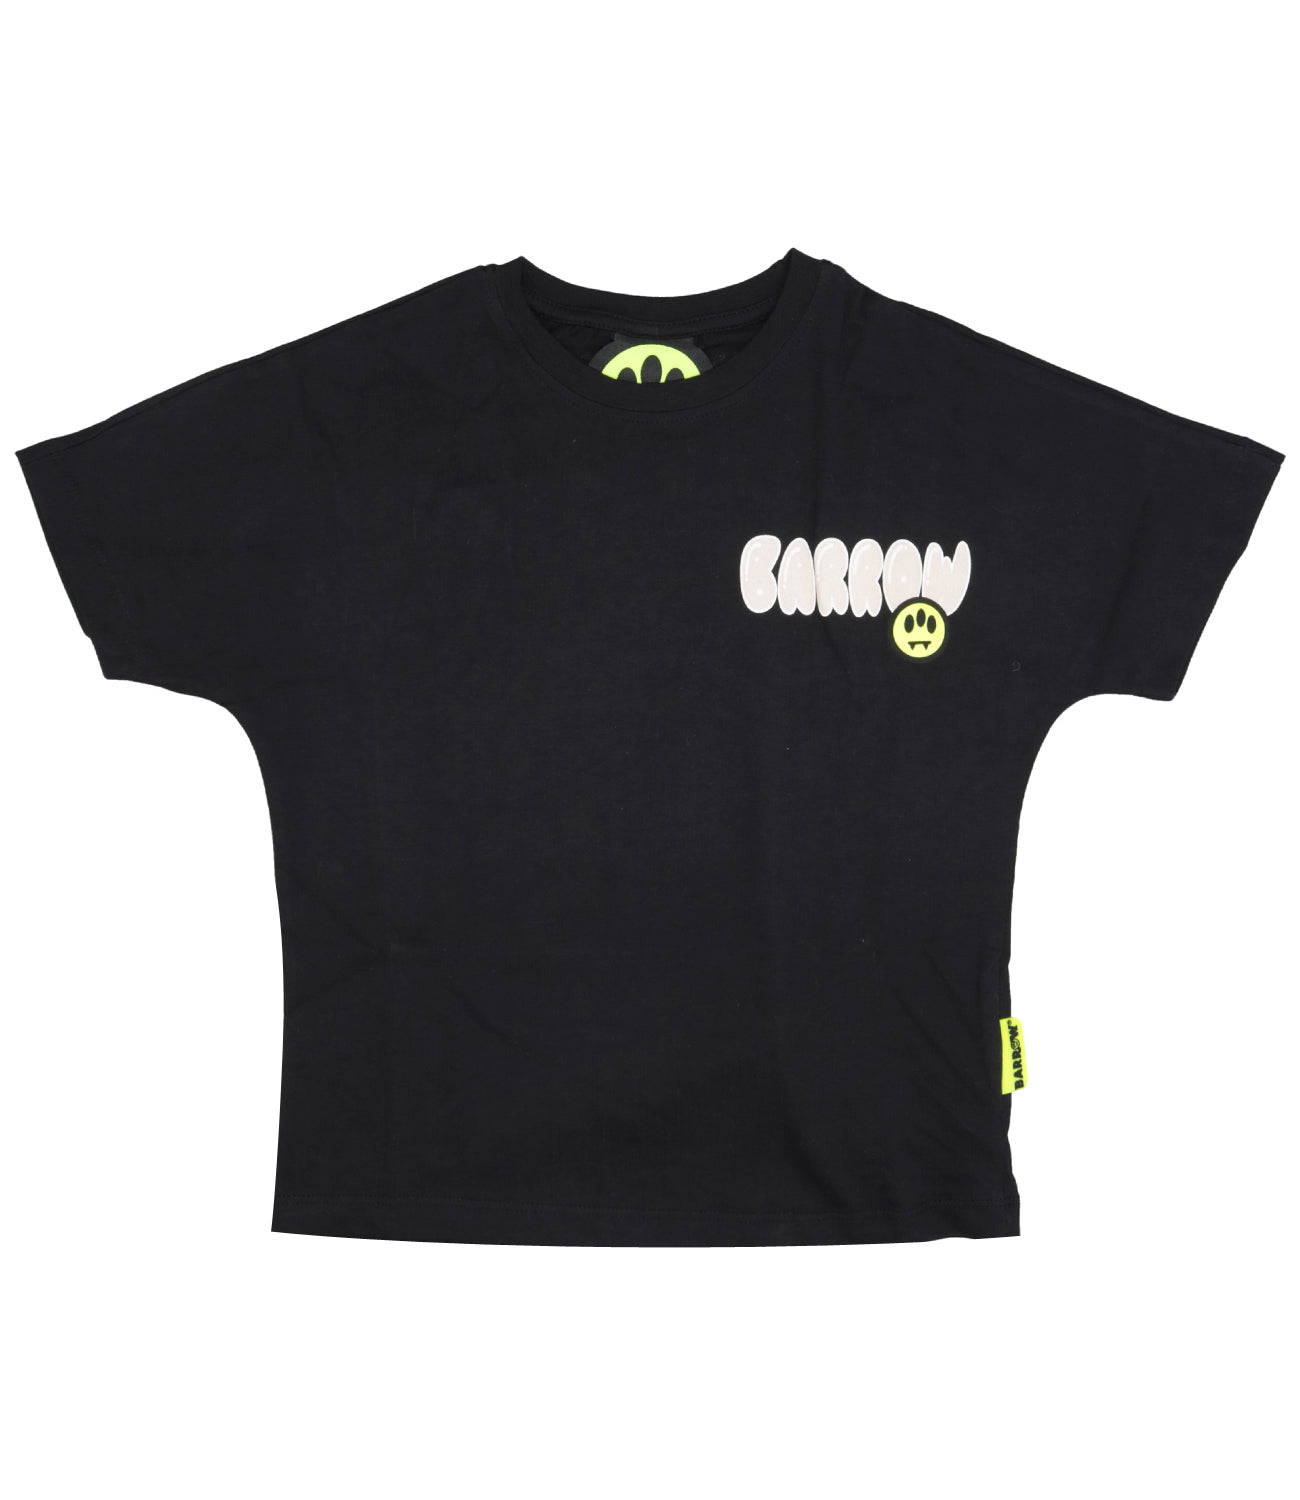 Barrow Kids | Black T-Shirt